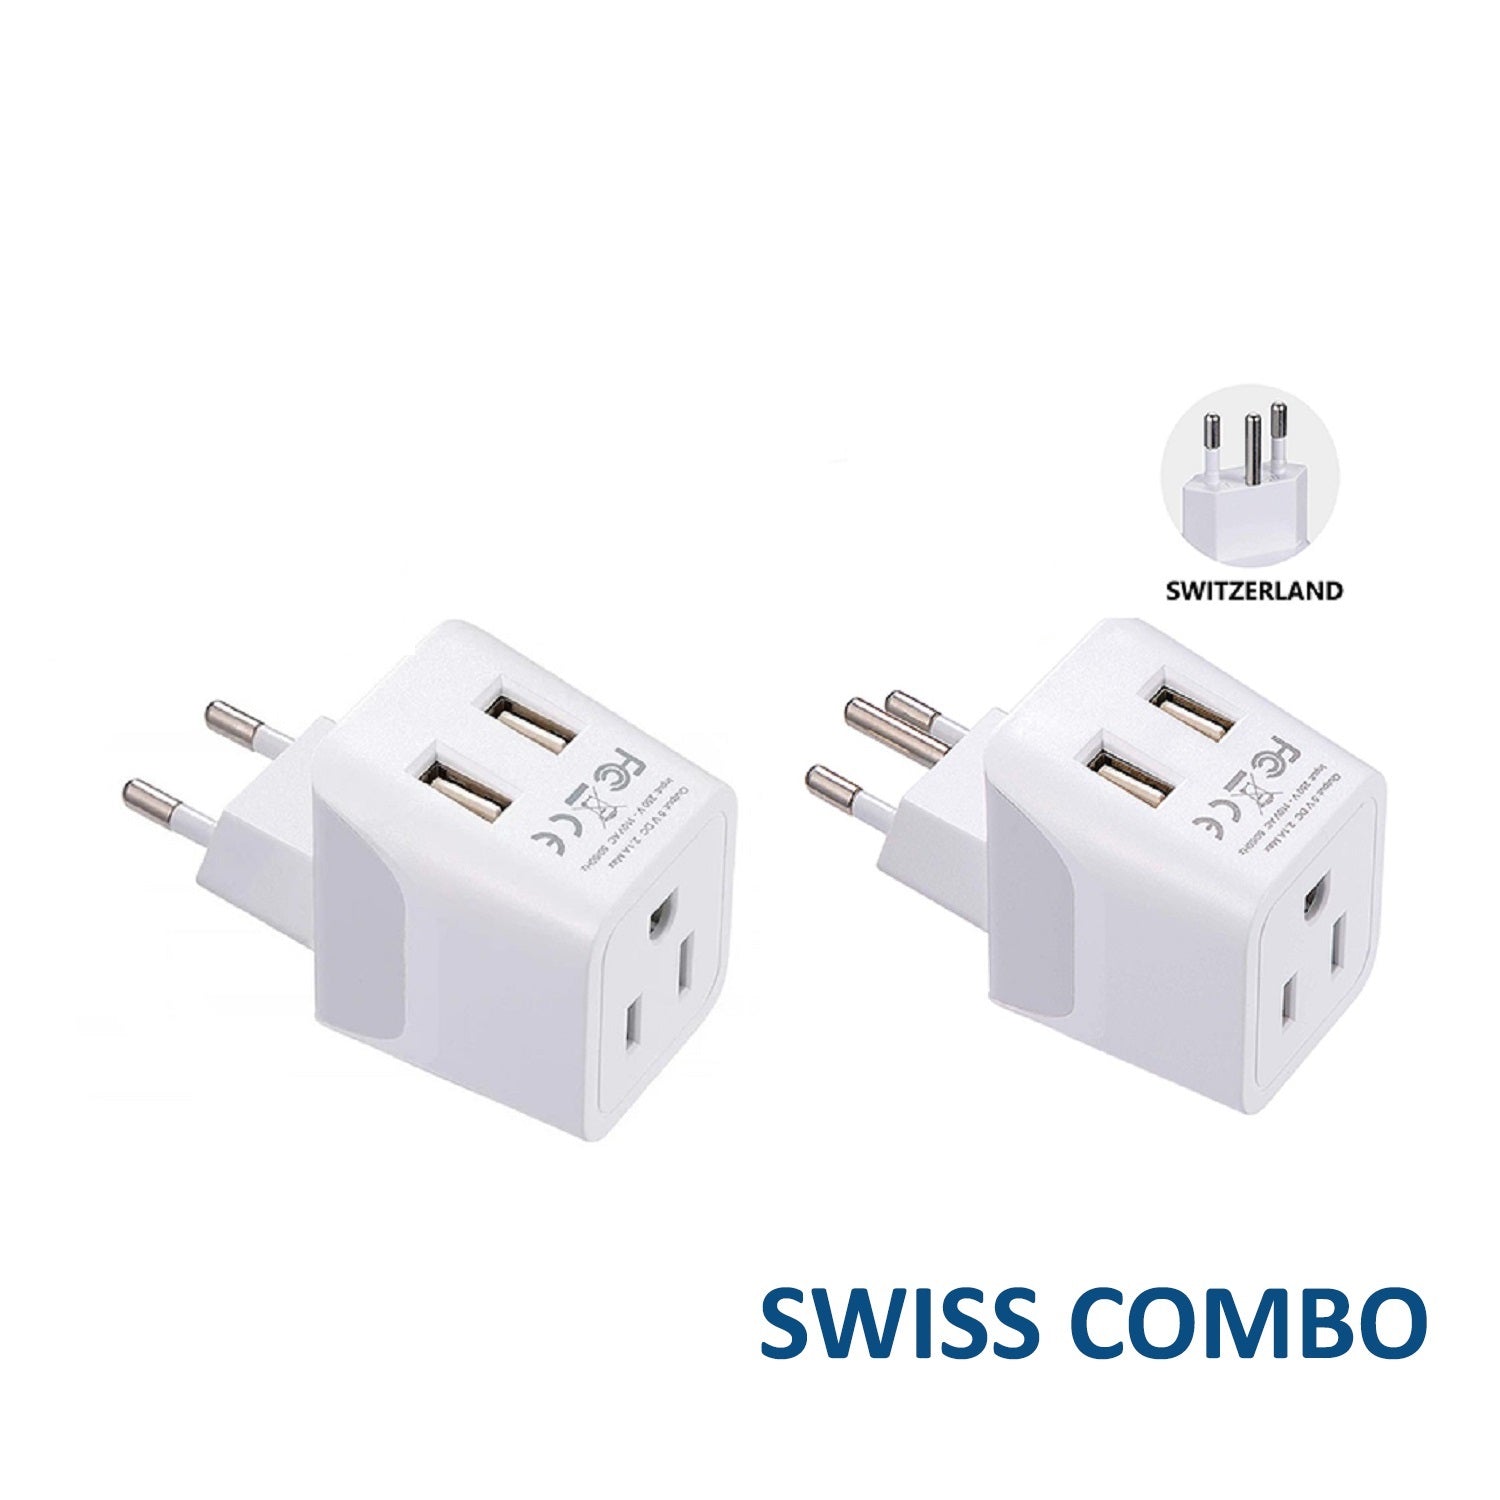 Ceptics Switzerland Travel Plug Adapter (Type J) - 3 Pack [Grounded &  Universal] (GP-11A-3PK)